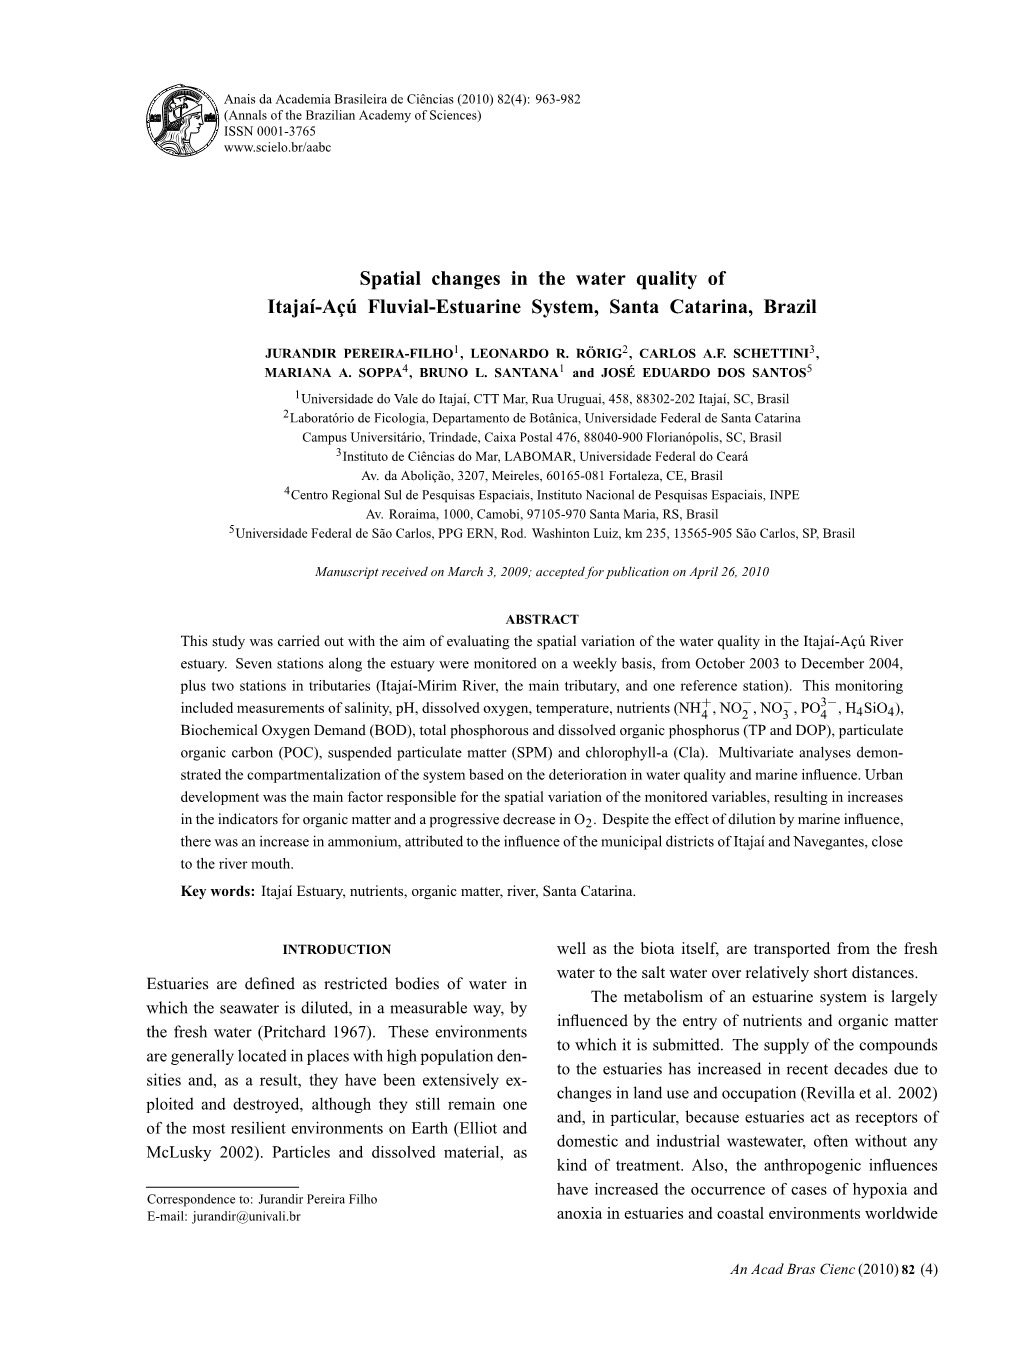 Spatial Changes in the Water Quality of Itajaí-Açú Fluvial-Estuarine System, Santa Catarina, Brazil